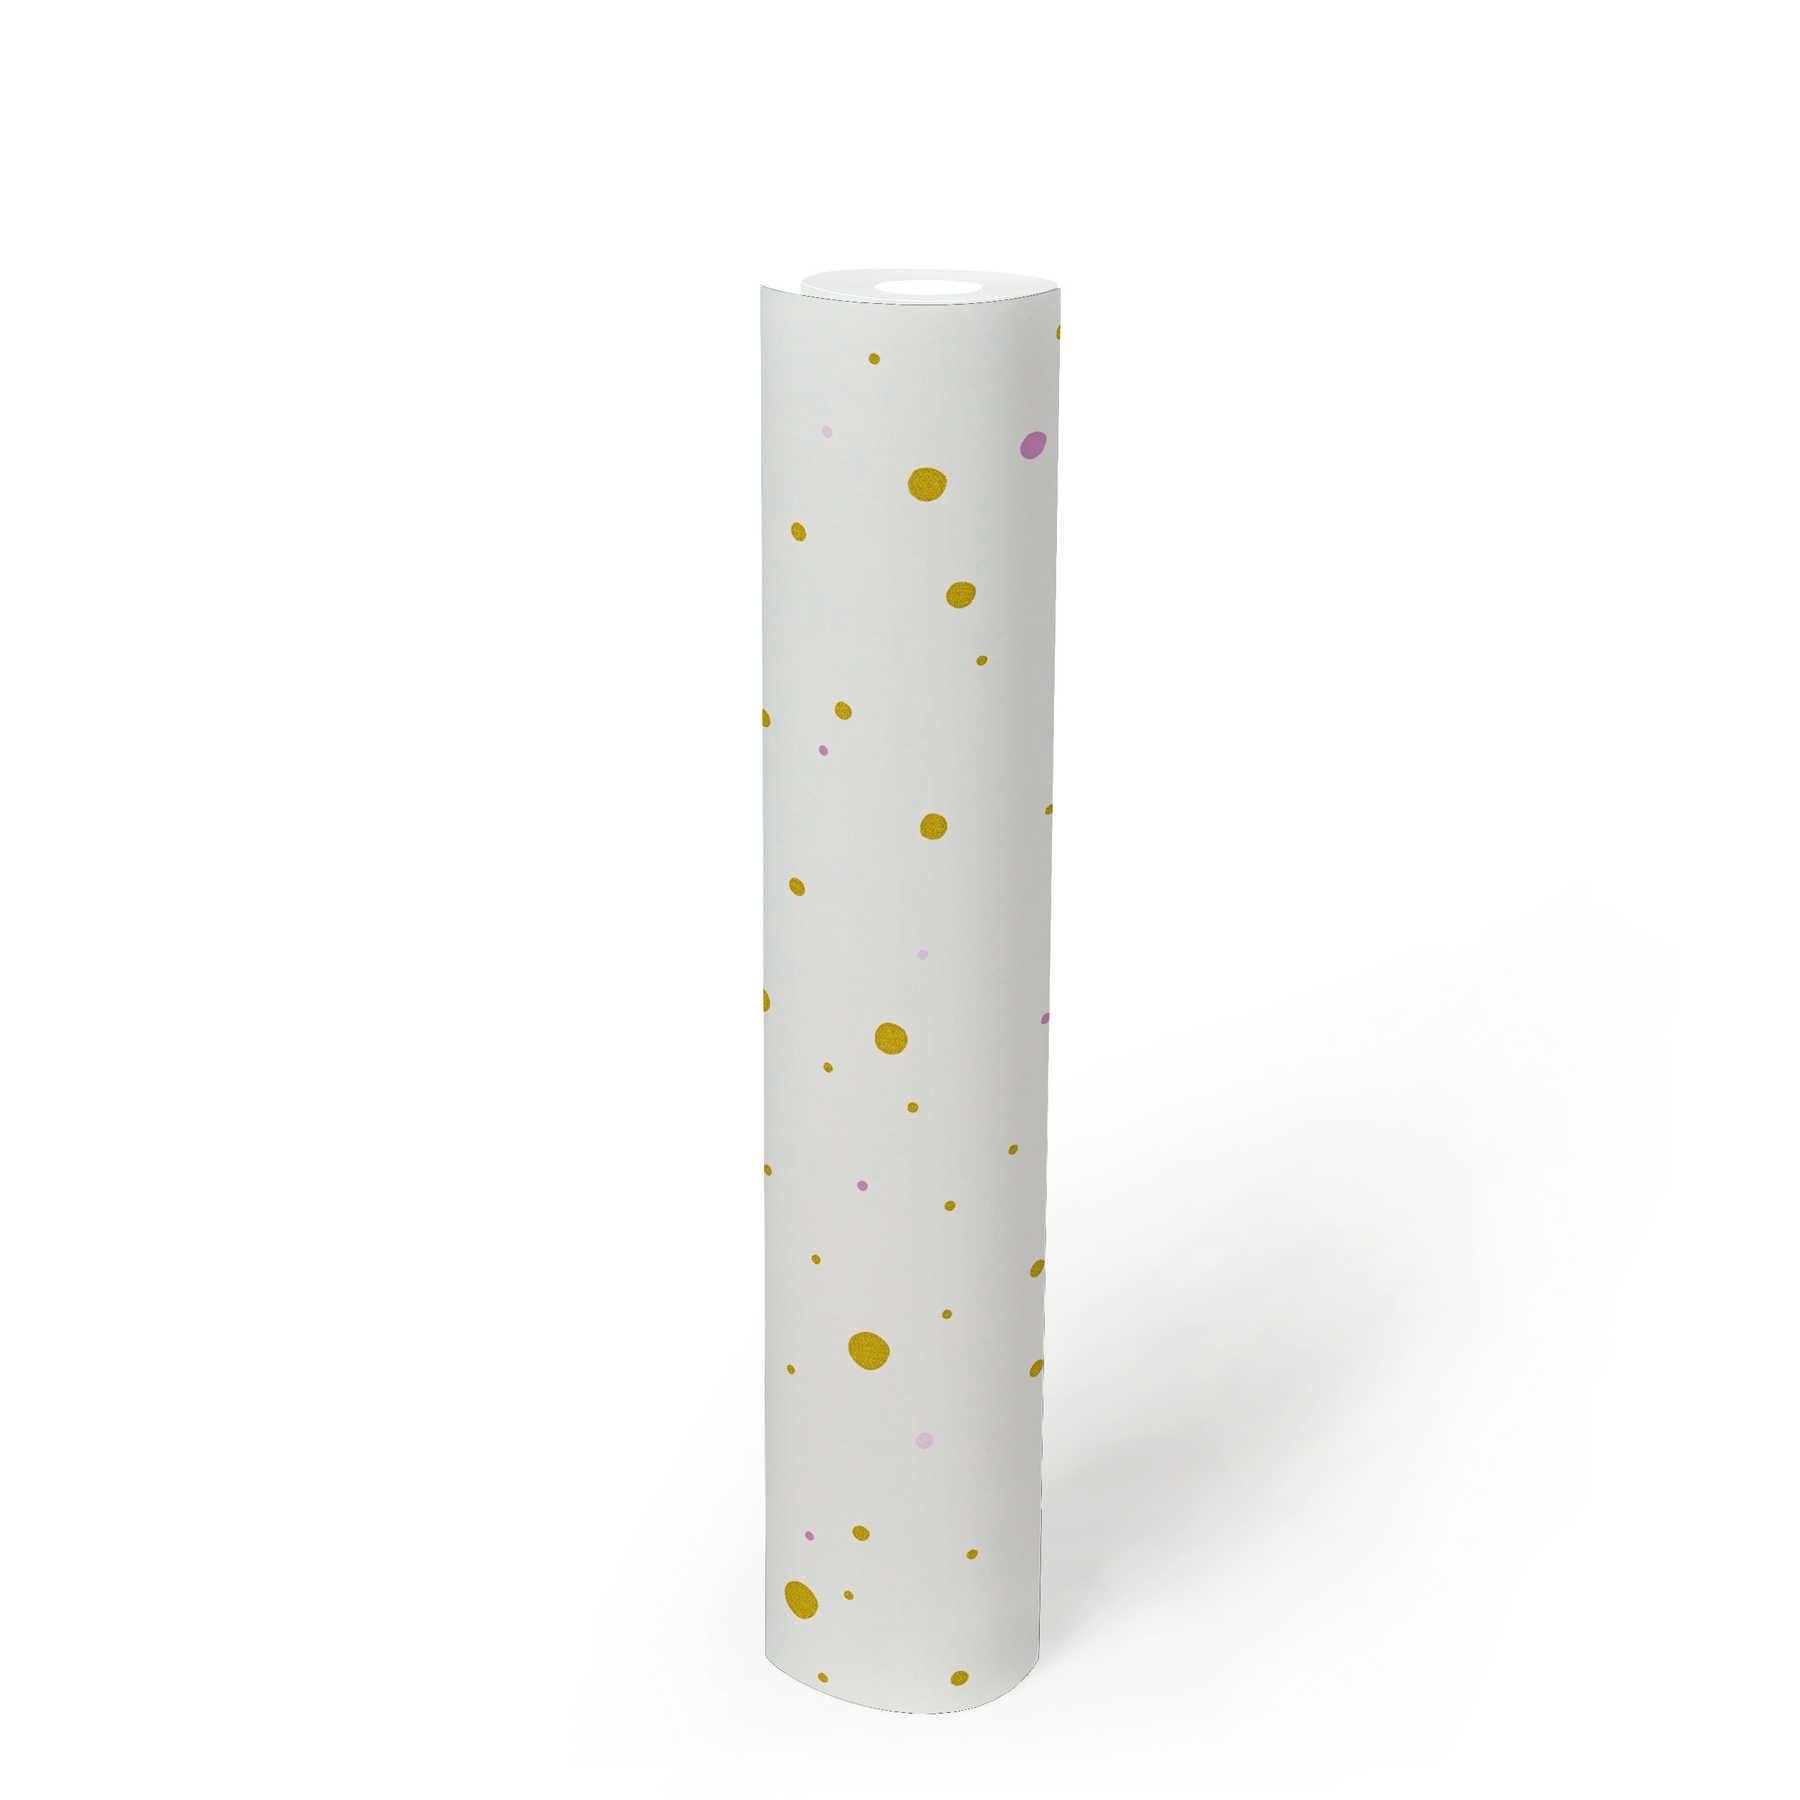             Wallpaper dots & metallic effect for Nursery - white
        